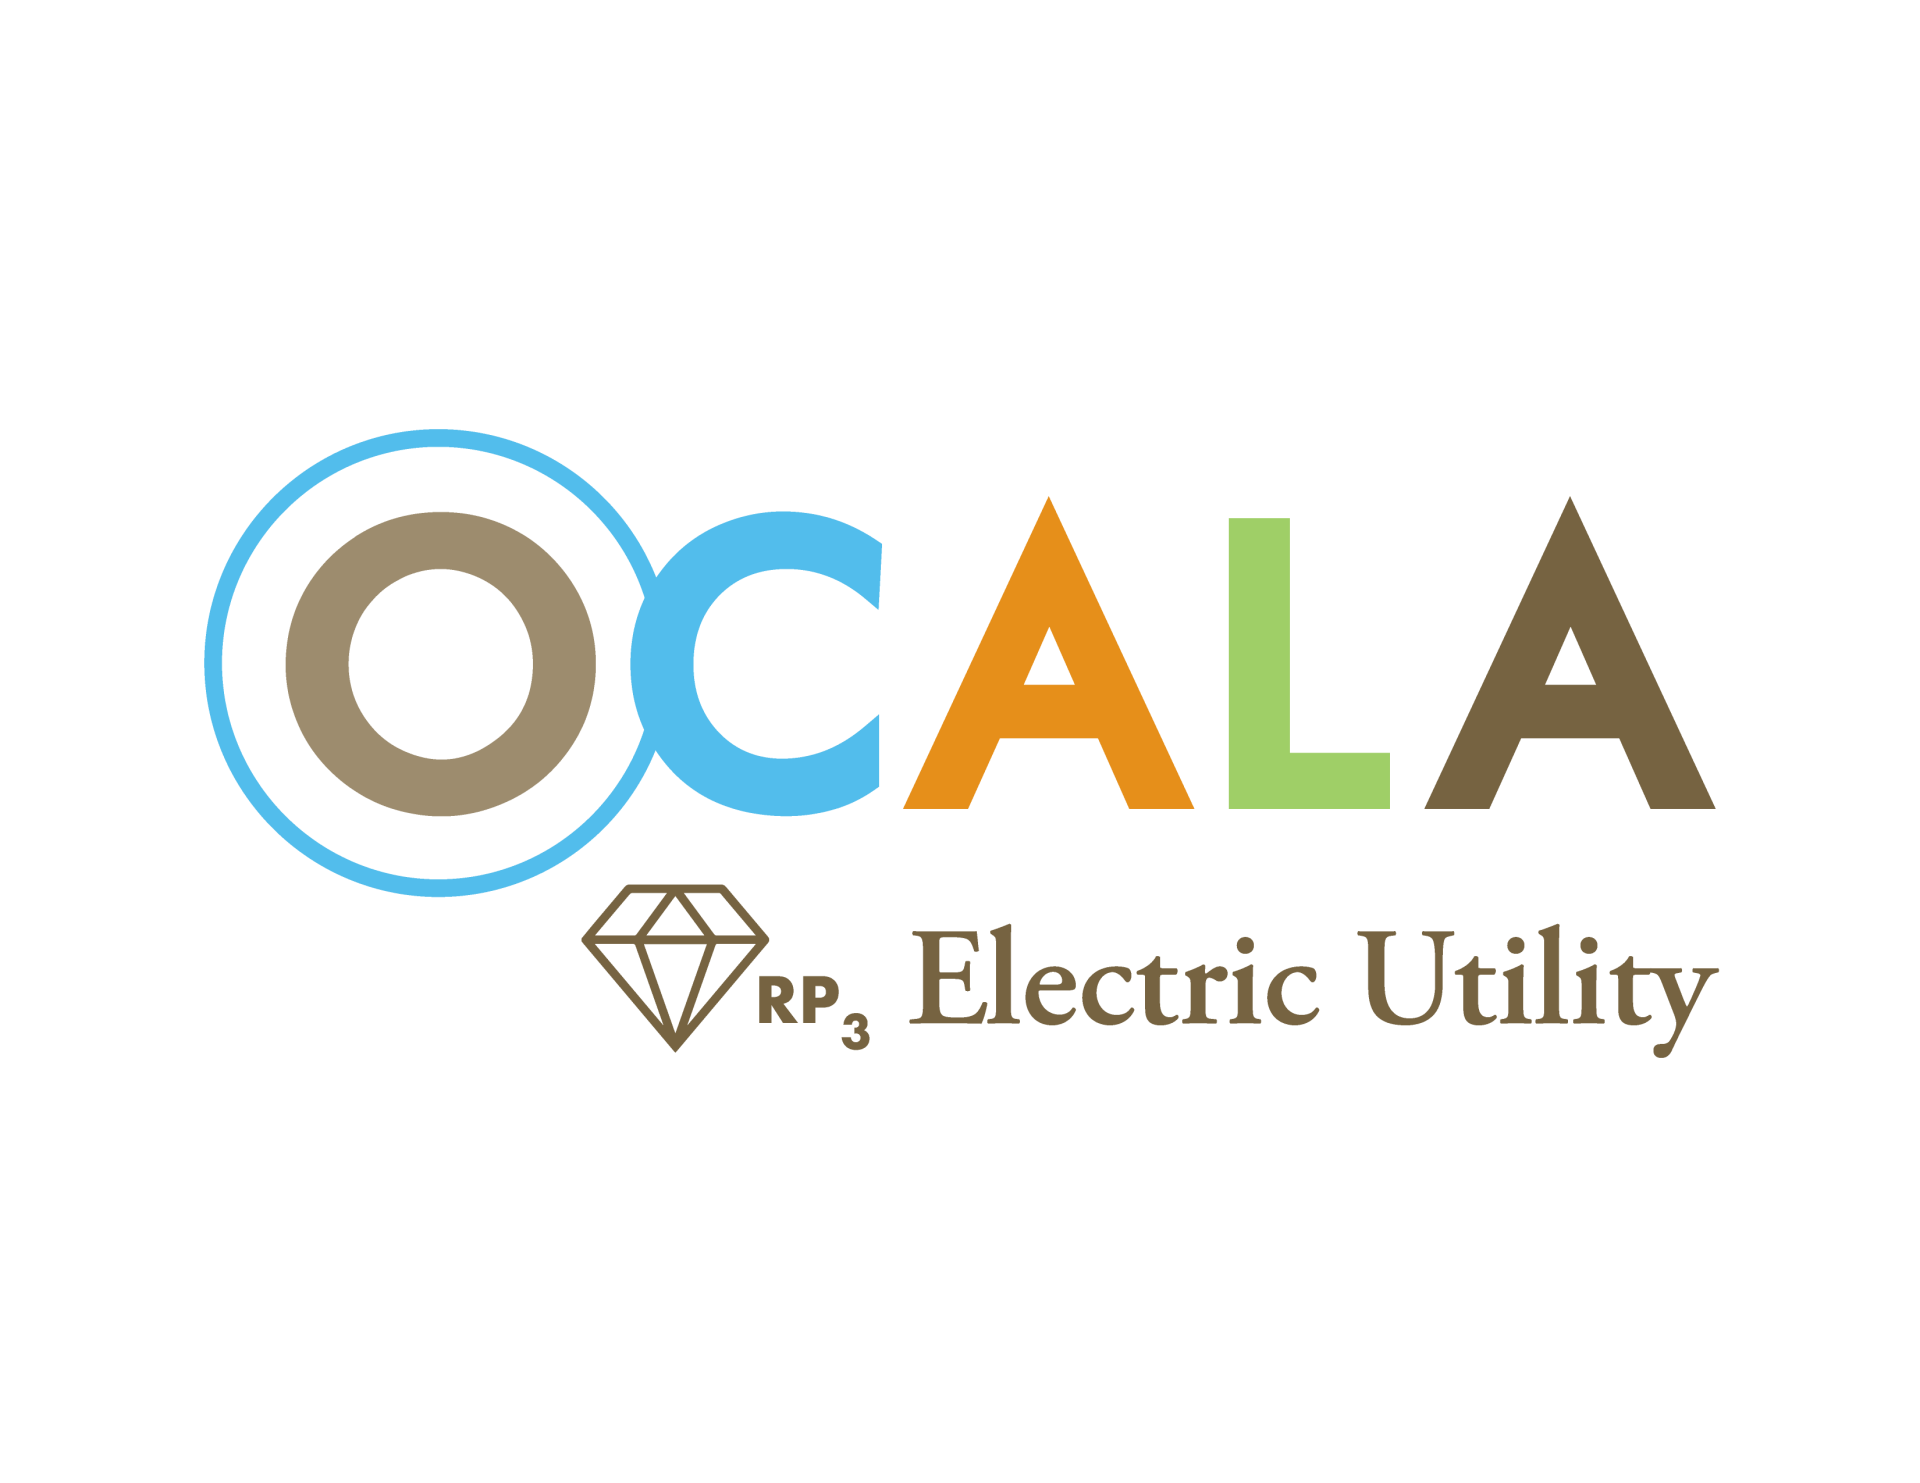 Ocala Electric Utility It's On!